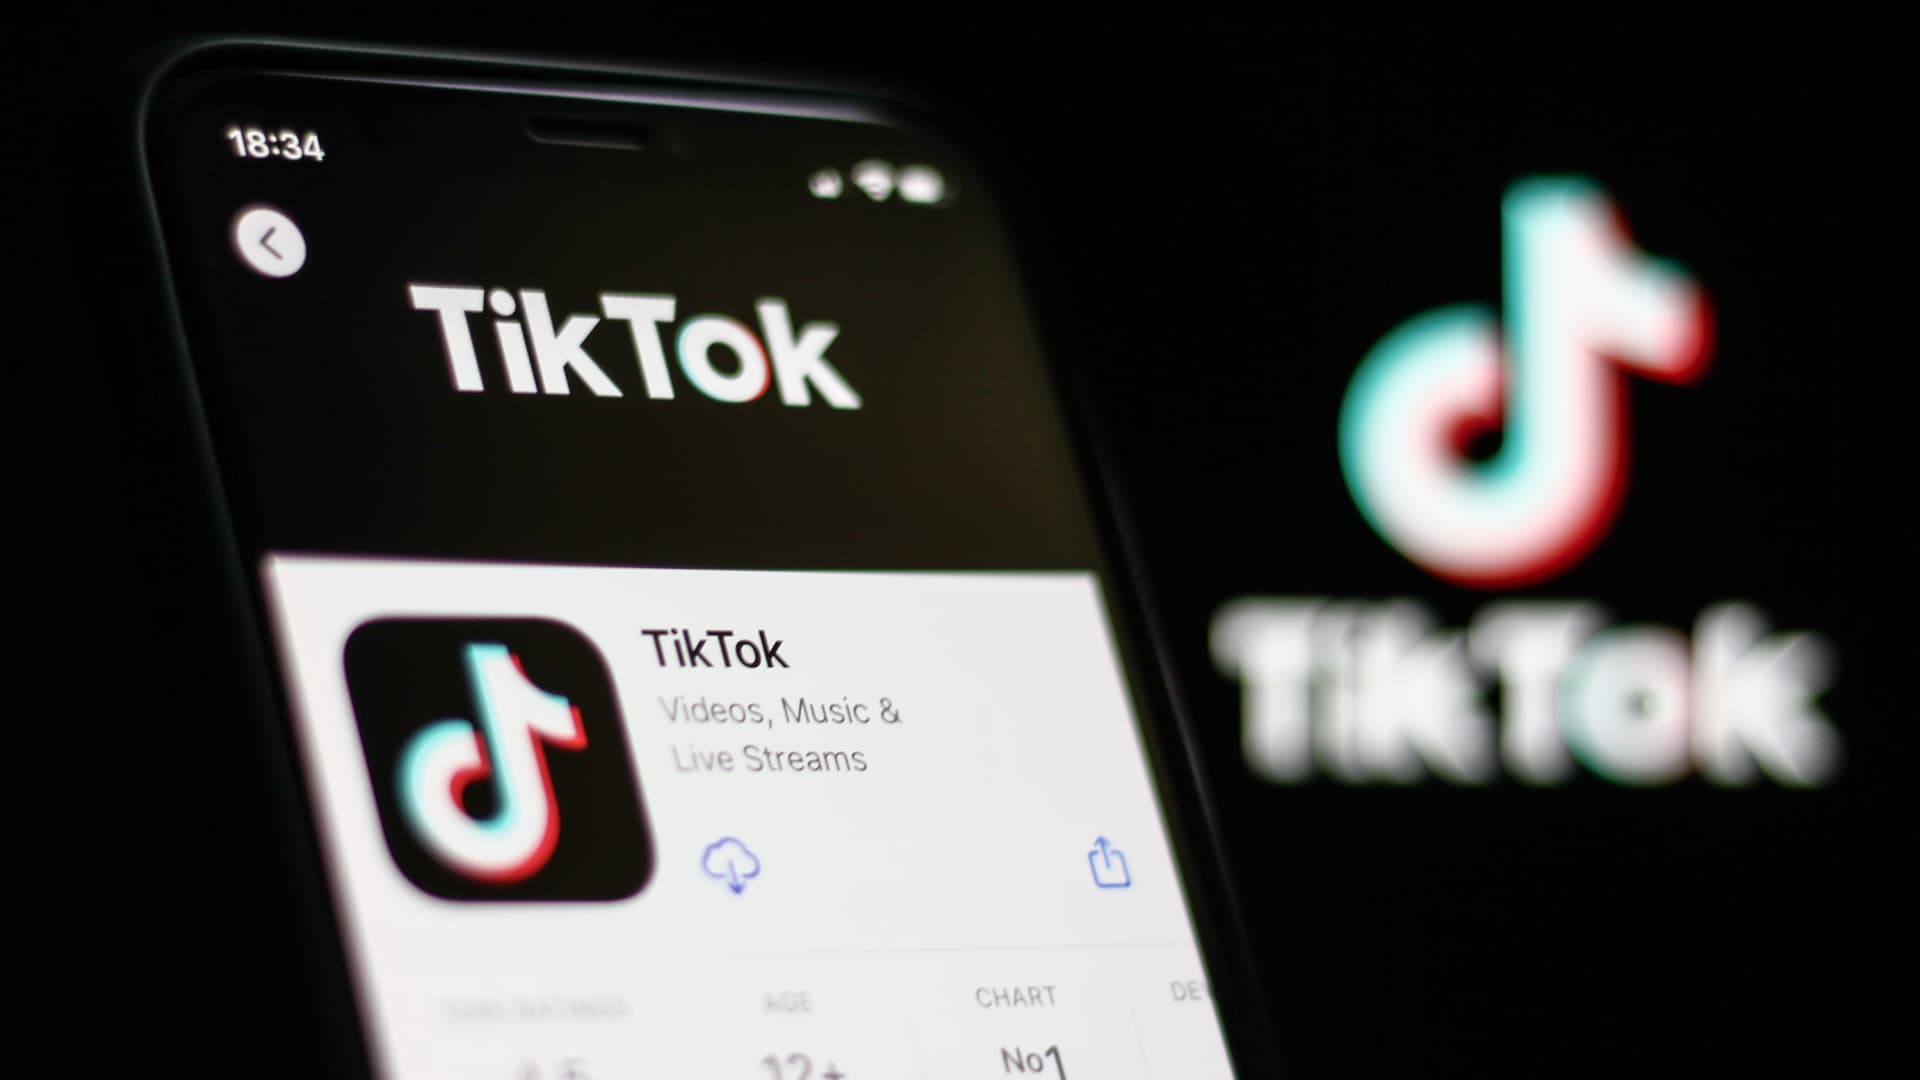 TikTok application on app store and TikTok logo behind